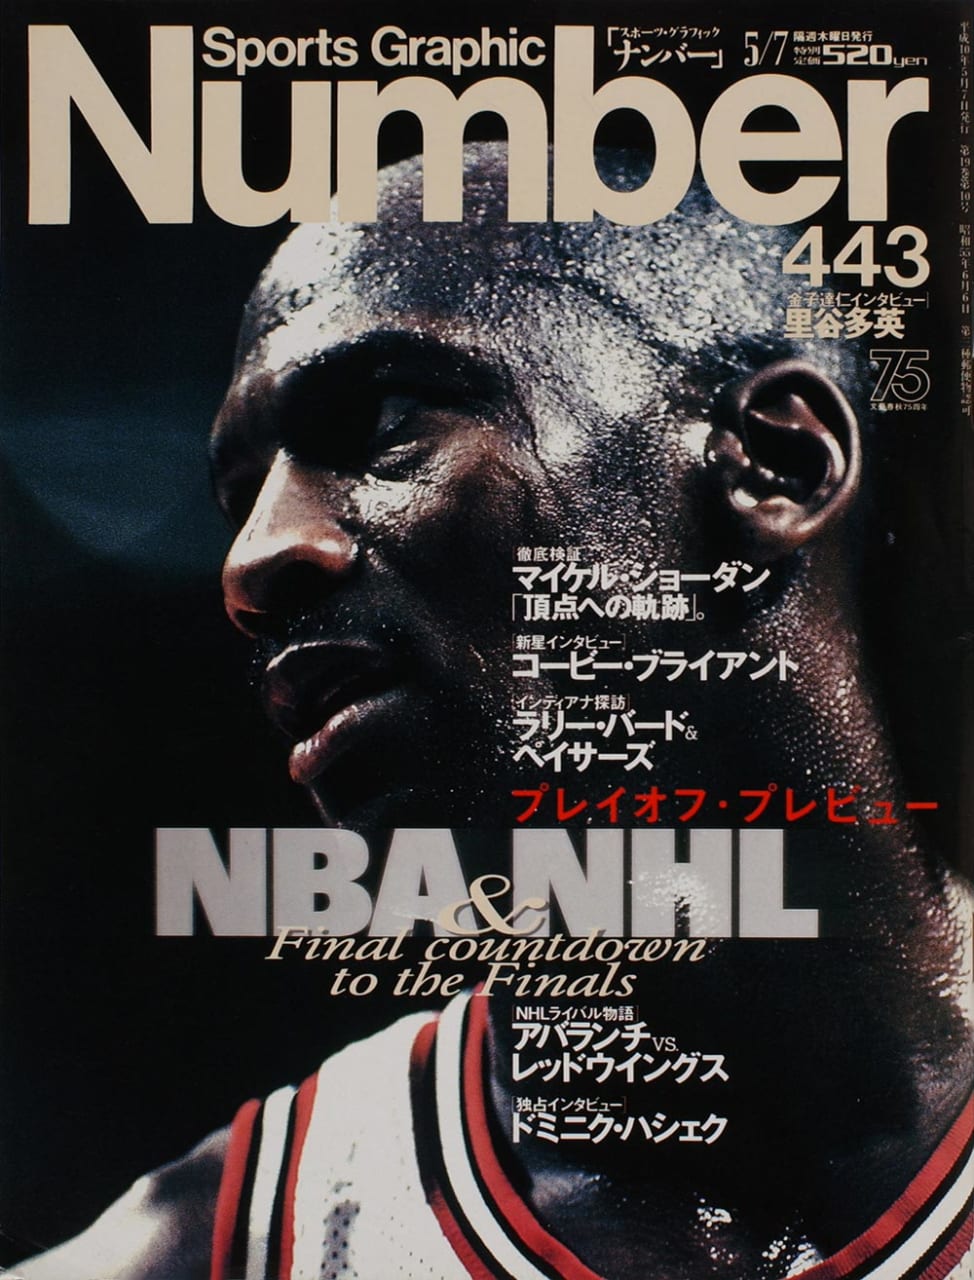 Sports Graphic Number 443号
1998年4月23日発売
表紙撮影：小池義弘